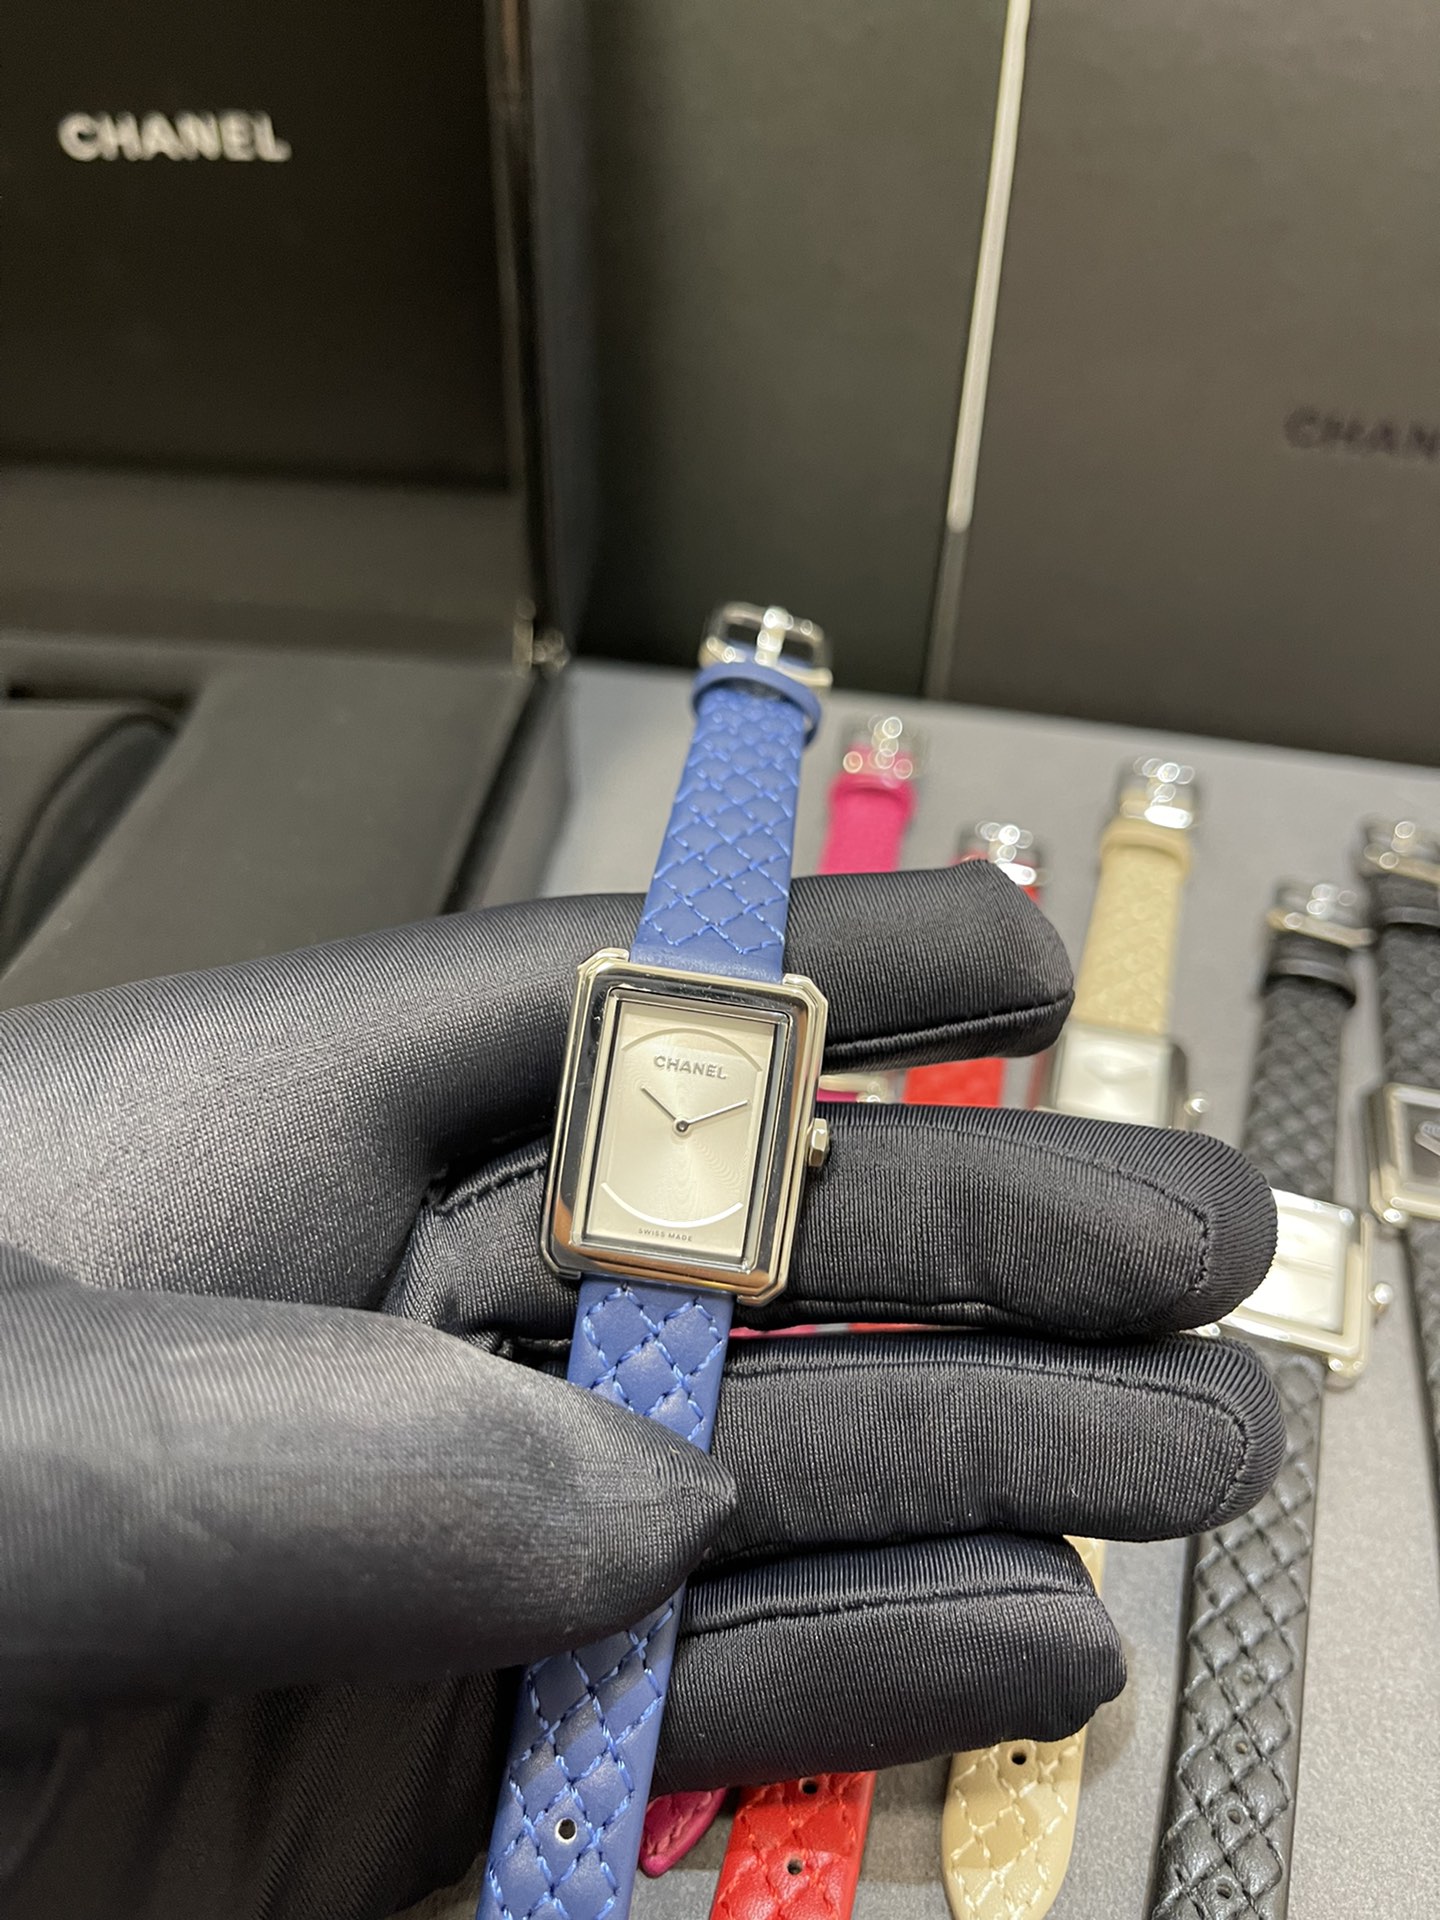 CHANEL シャネル 腕時計 値段激安通販 優雅 レディース専用 薄いワッチ プレゼント シンプル 多色可選 _5